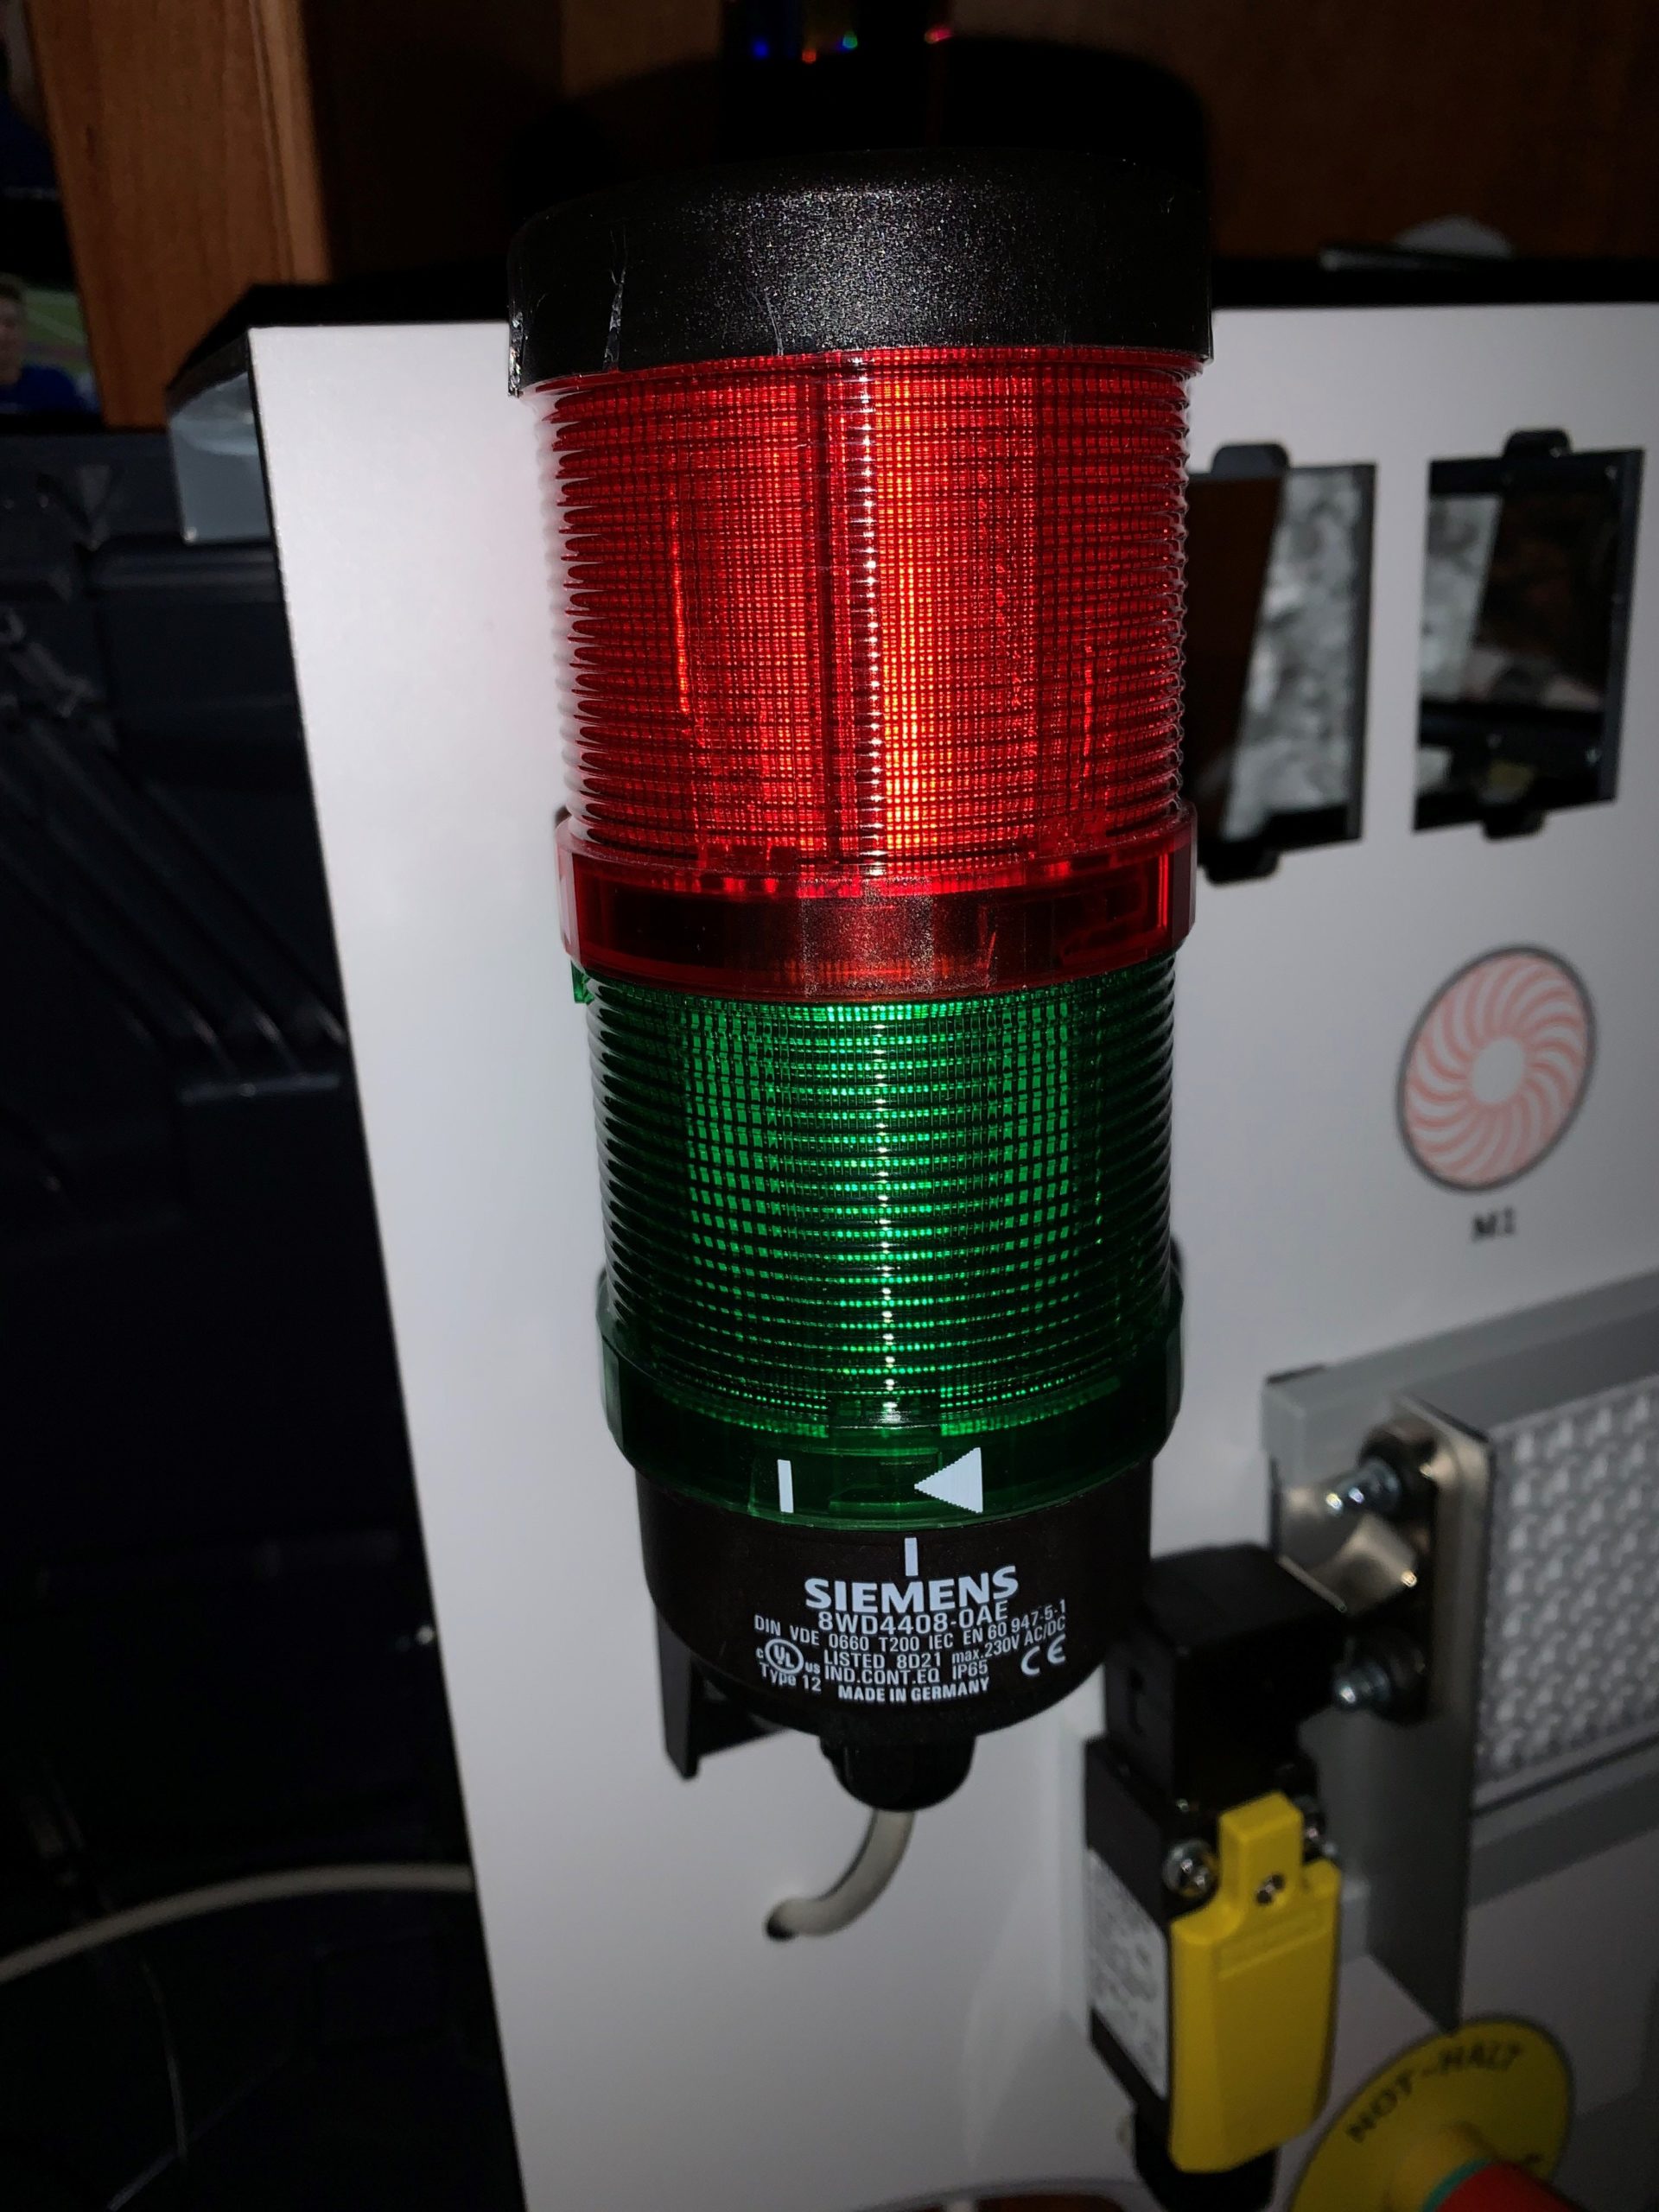 TIA Portal, S7 – Flashing Lights Program | The Automation Blog